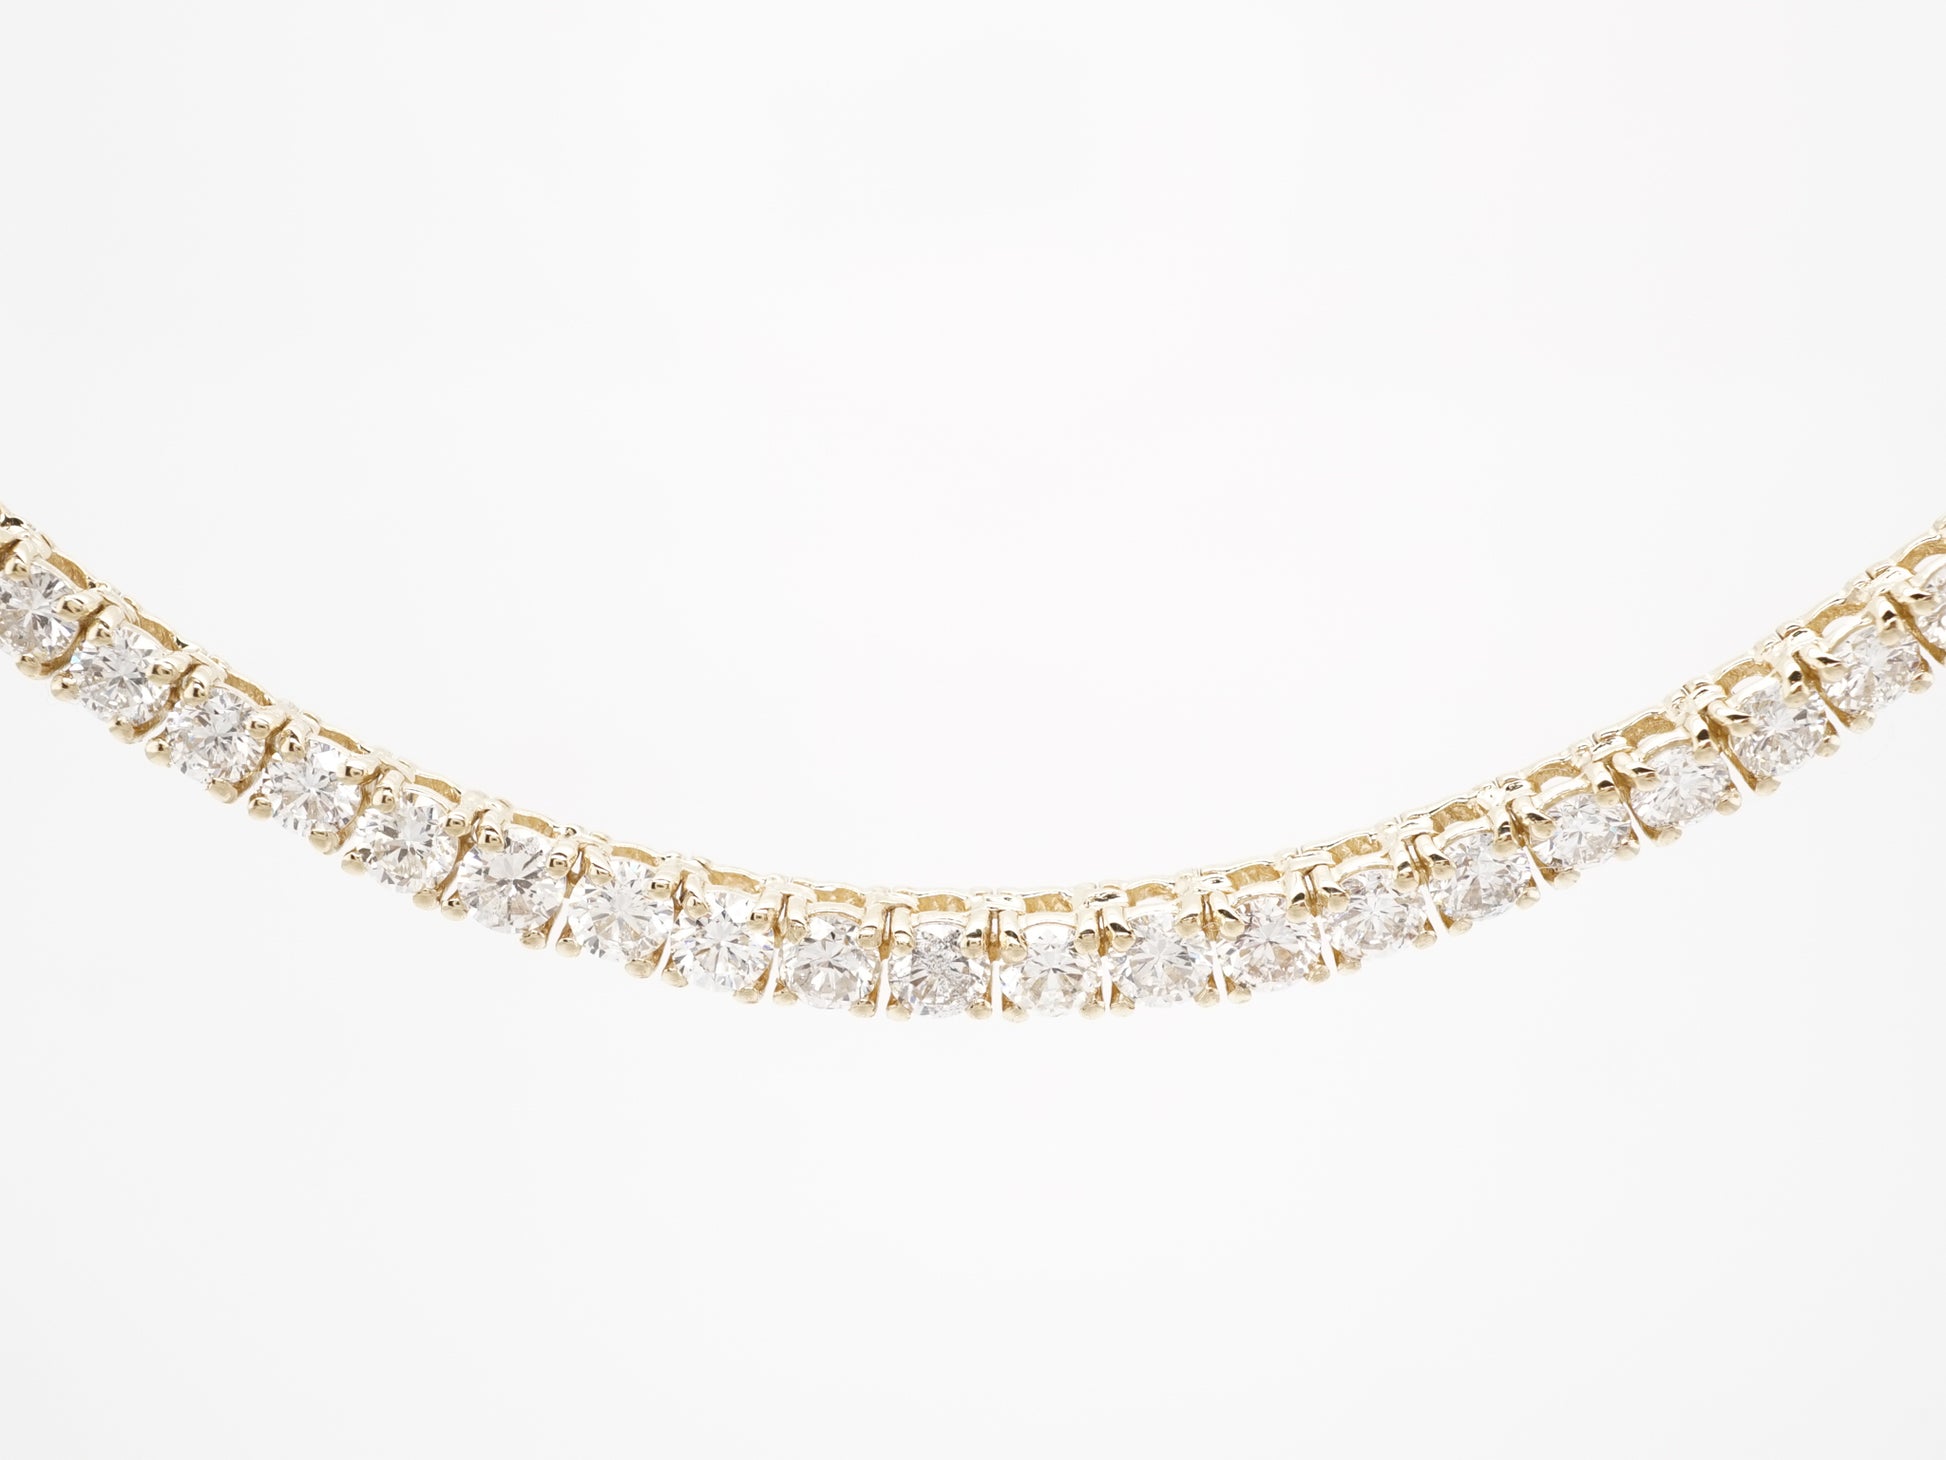 8.18 Carat Diamond Tennis Necklace in 14K Yellow Gold